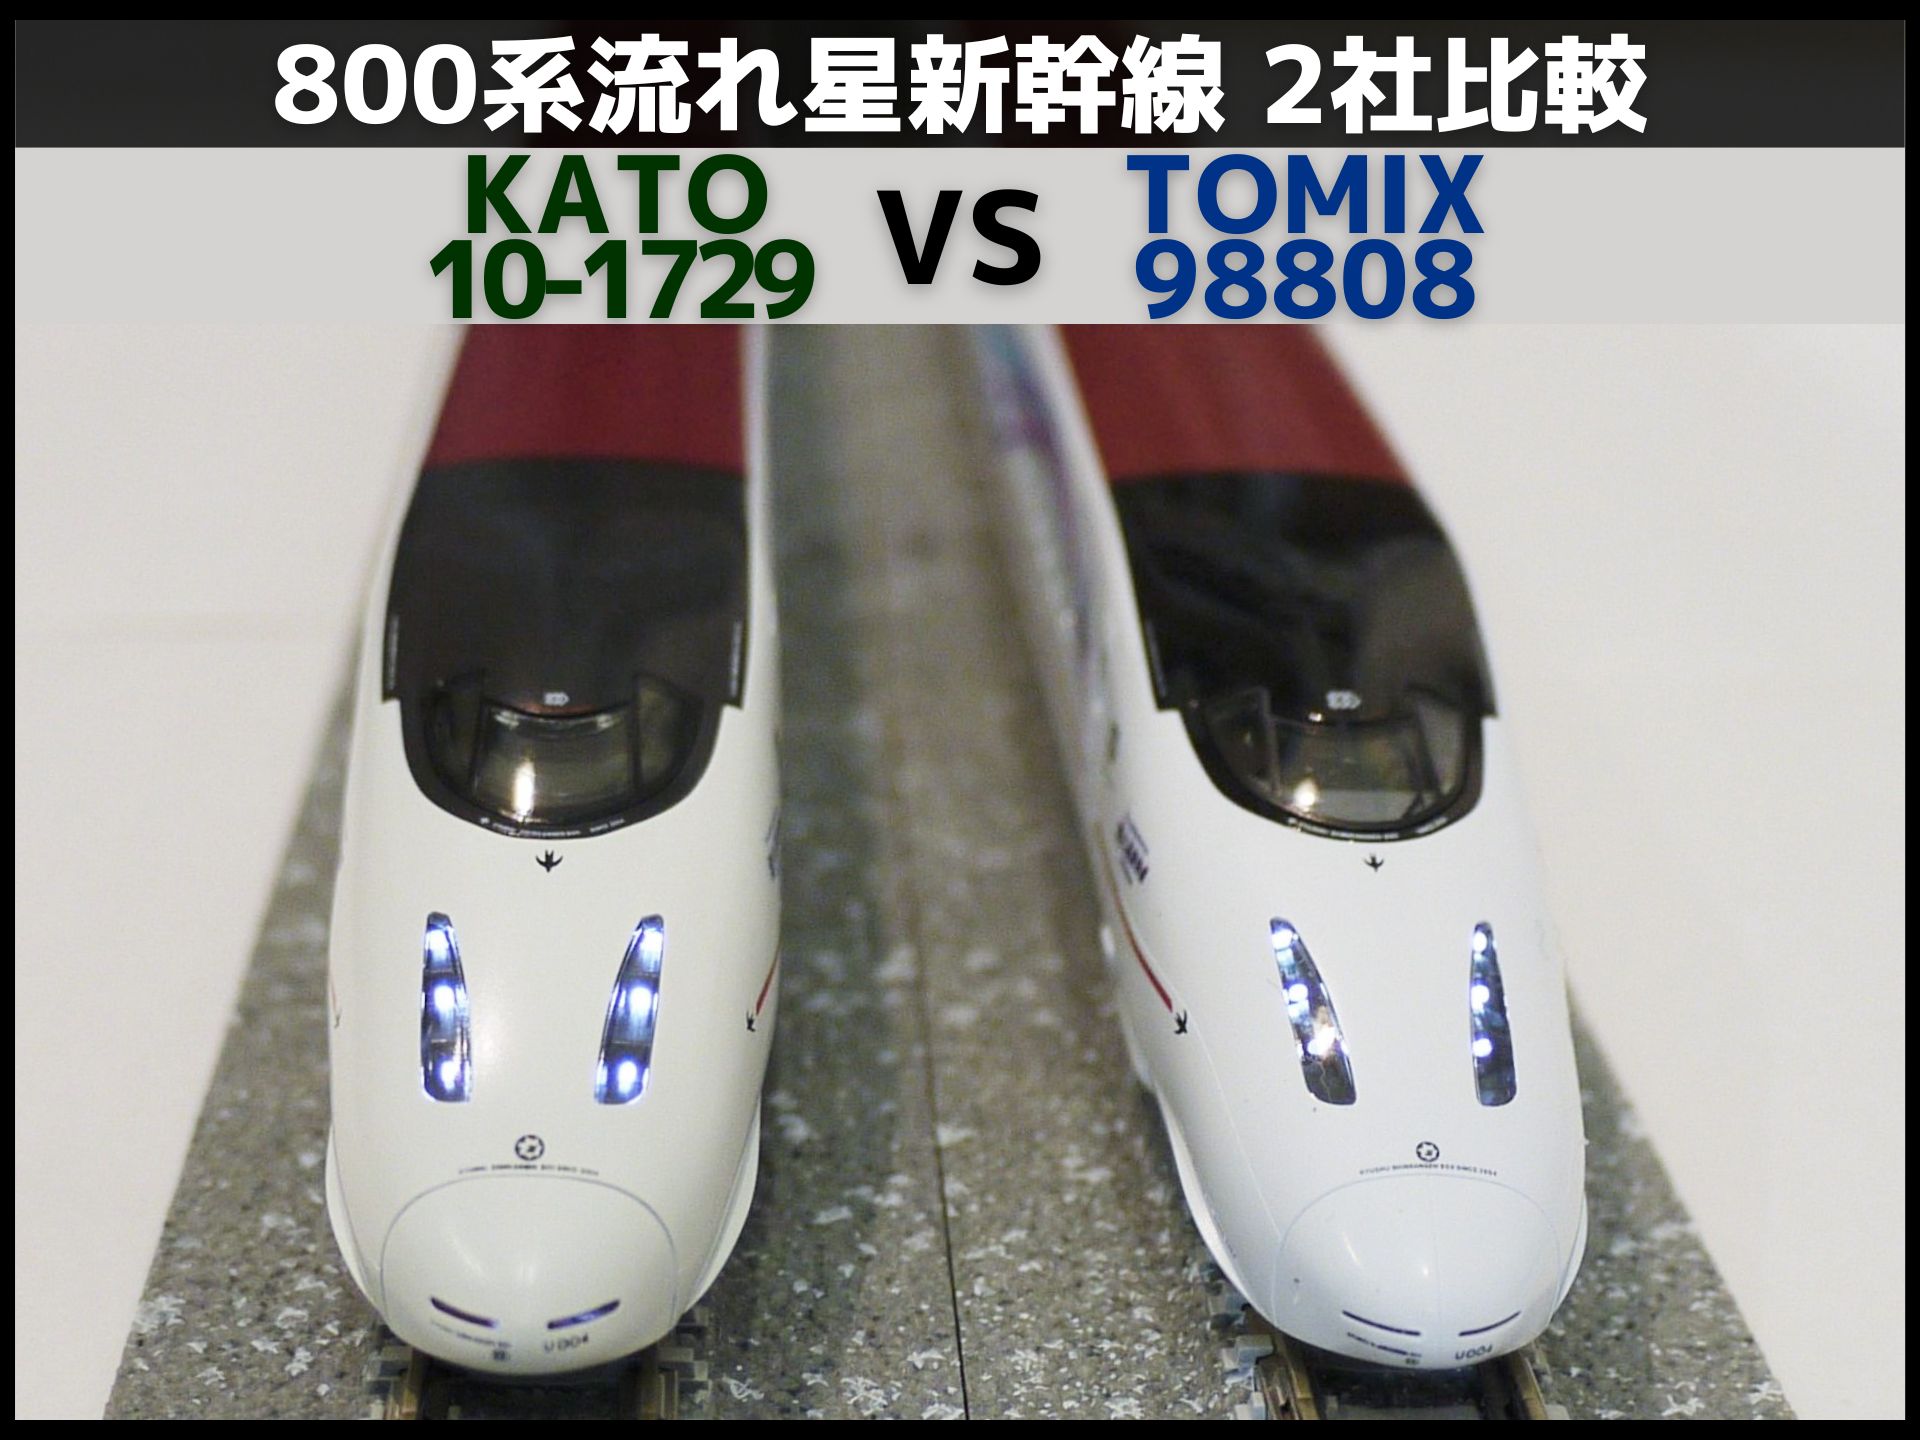 TOMIX、KATO 800系 流れ星新幹線 競合２社を比較（トミックス 97939